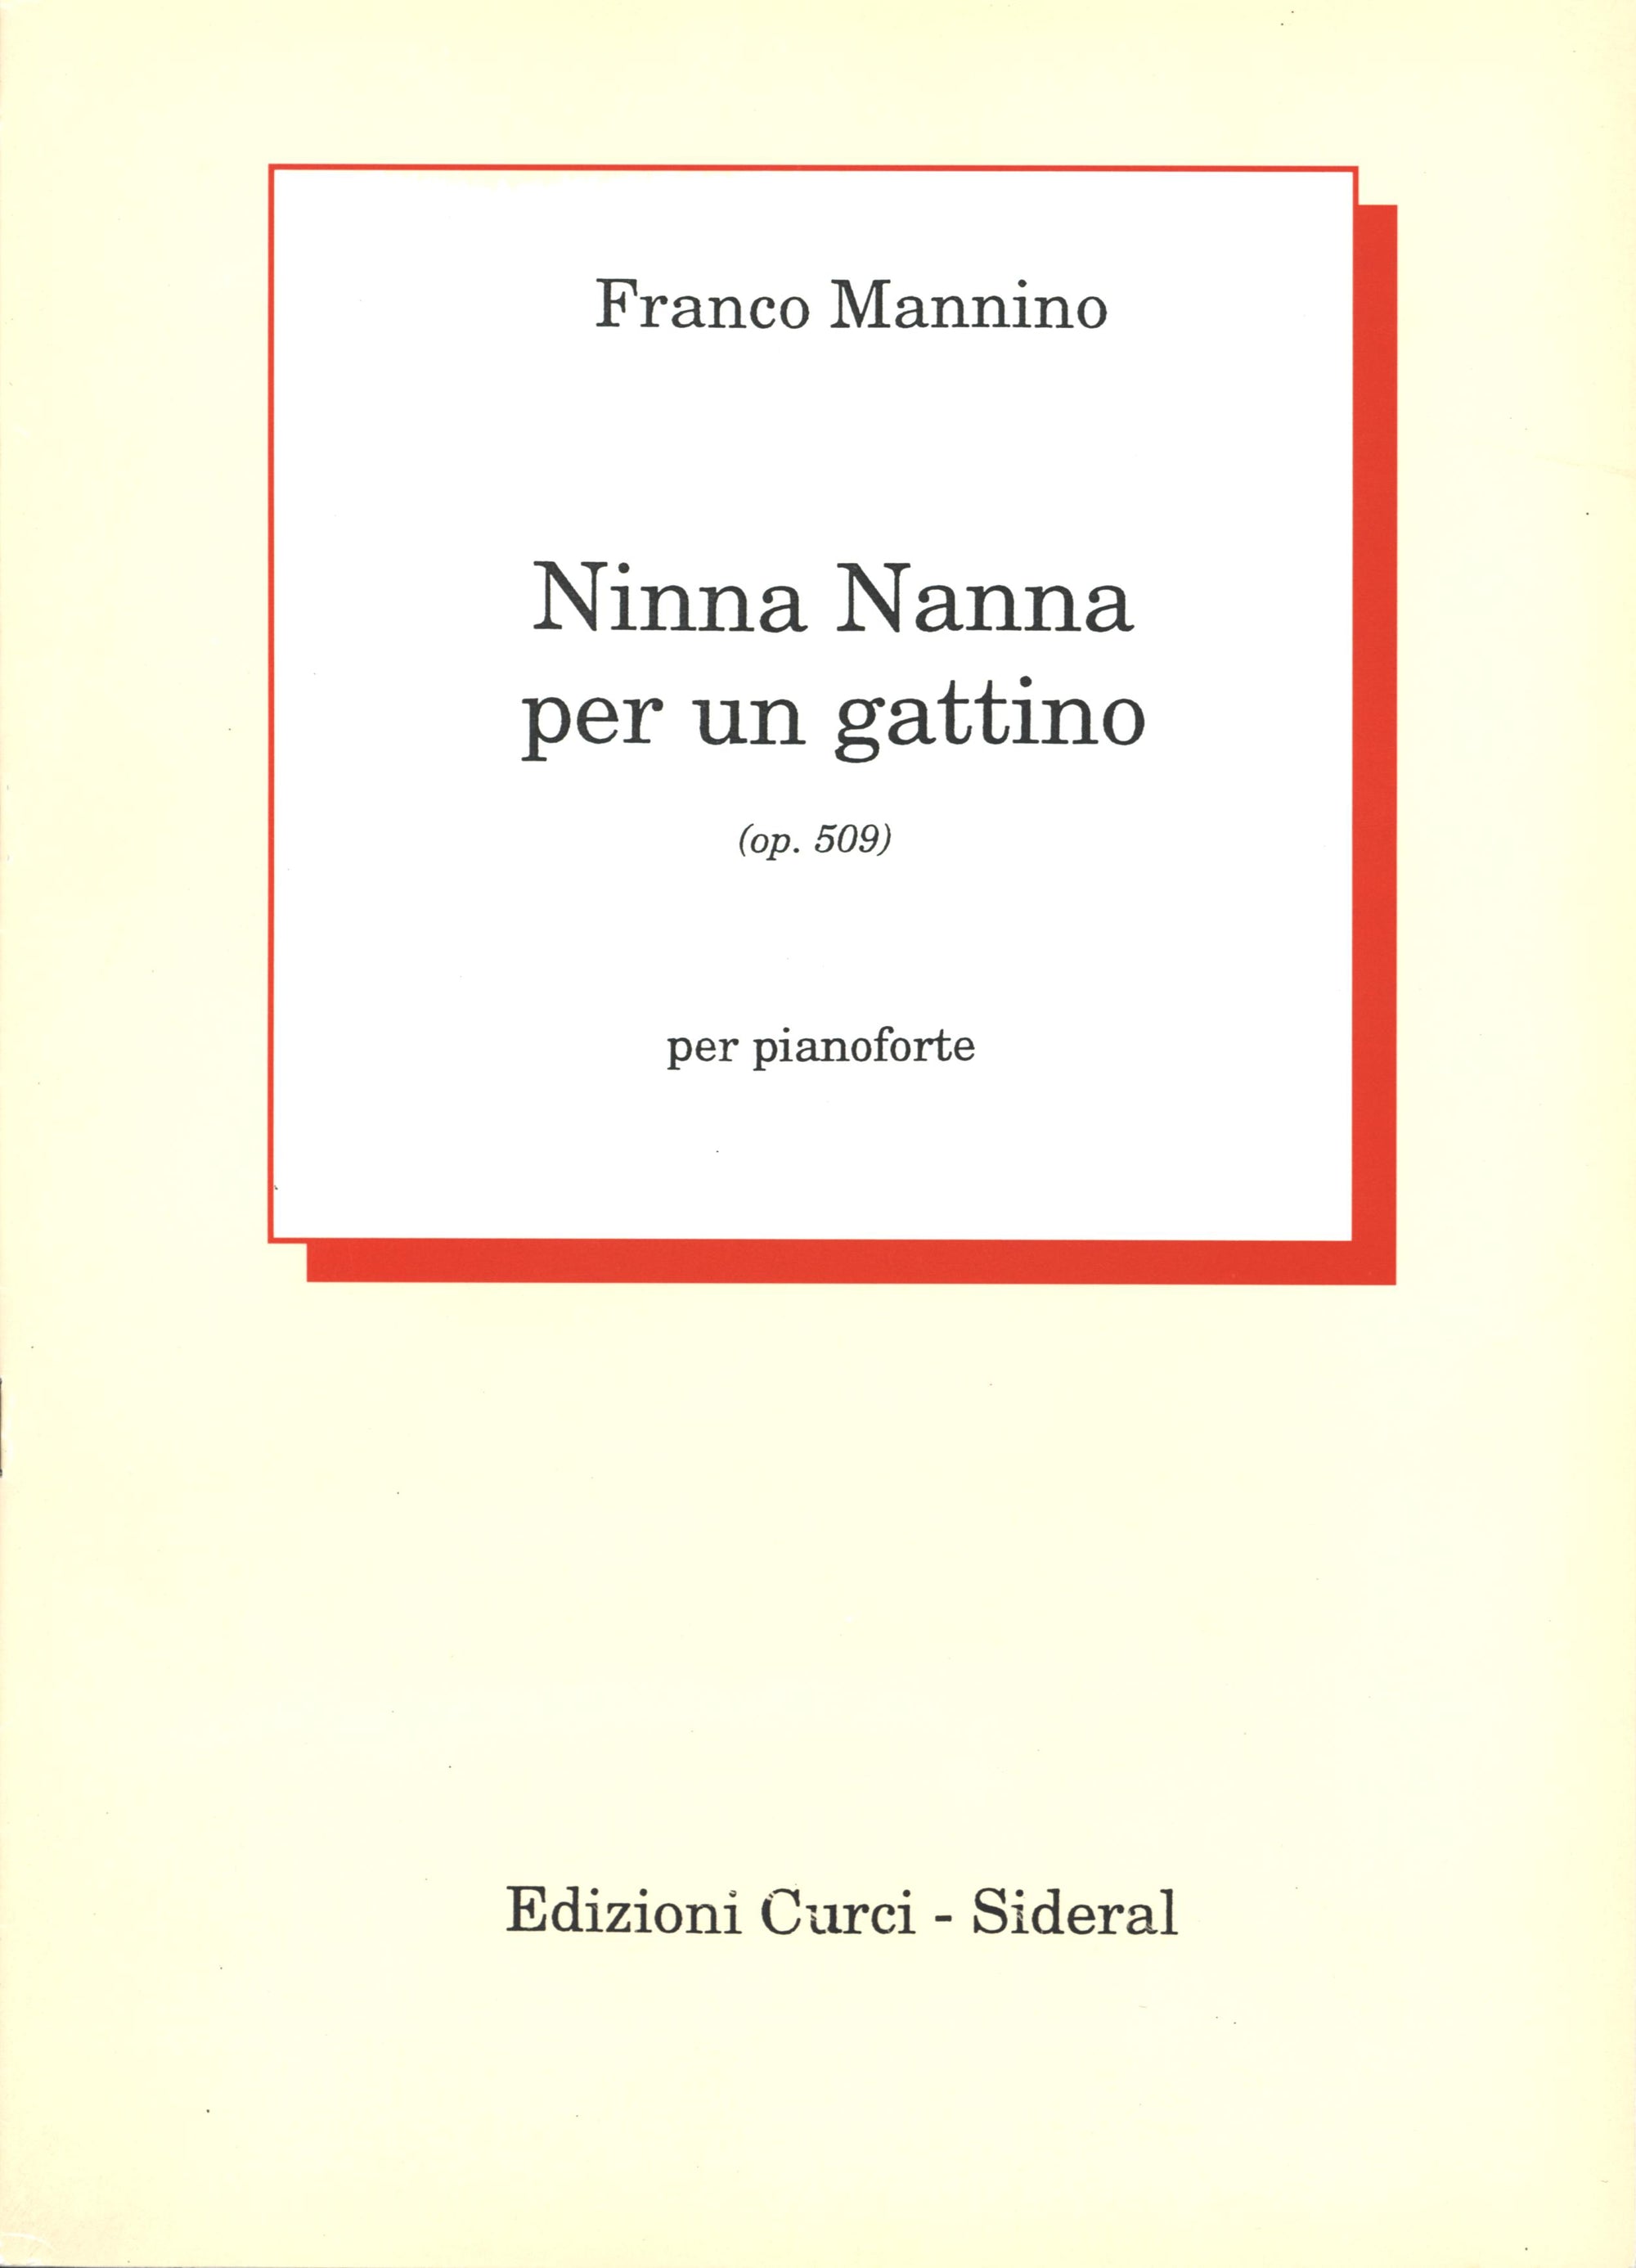 Mannino: Ninna Nanna per un gattino, Op. 509